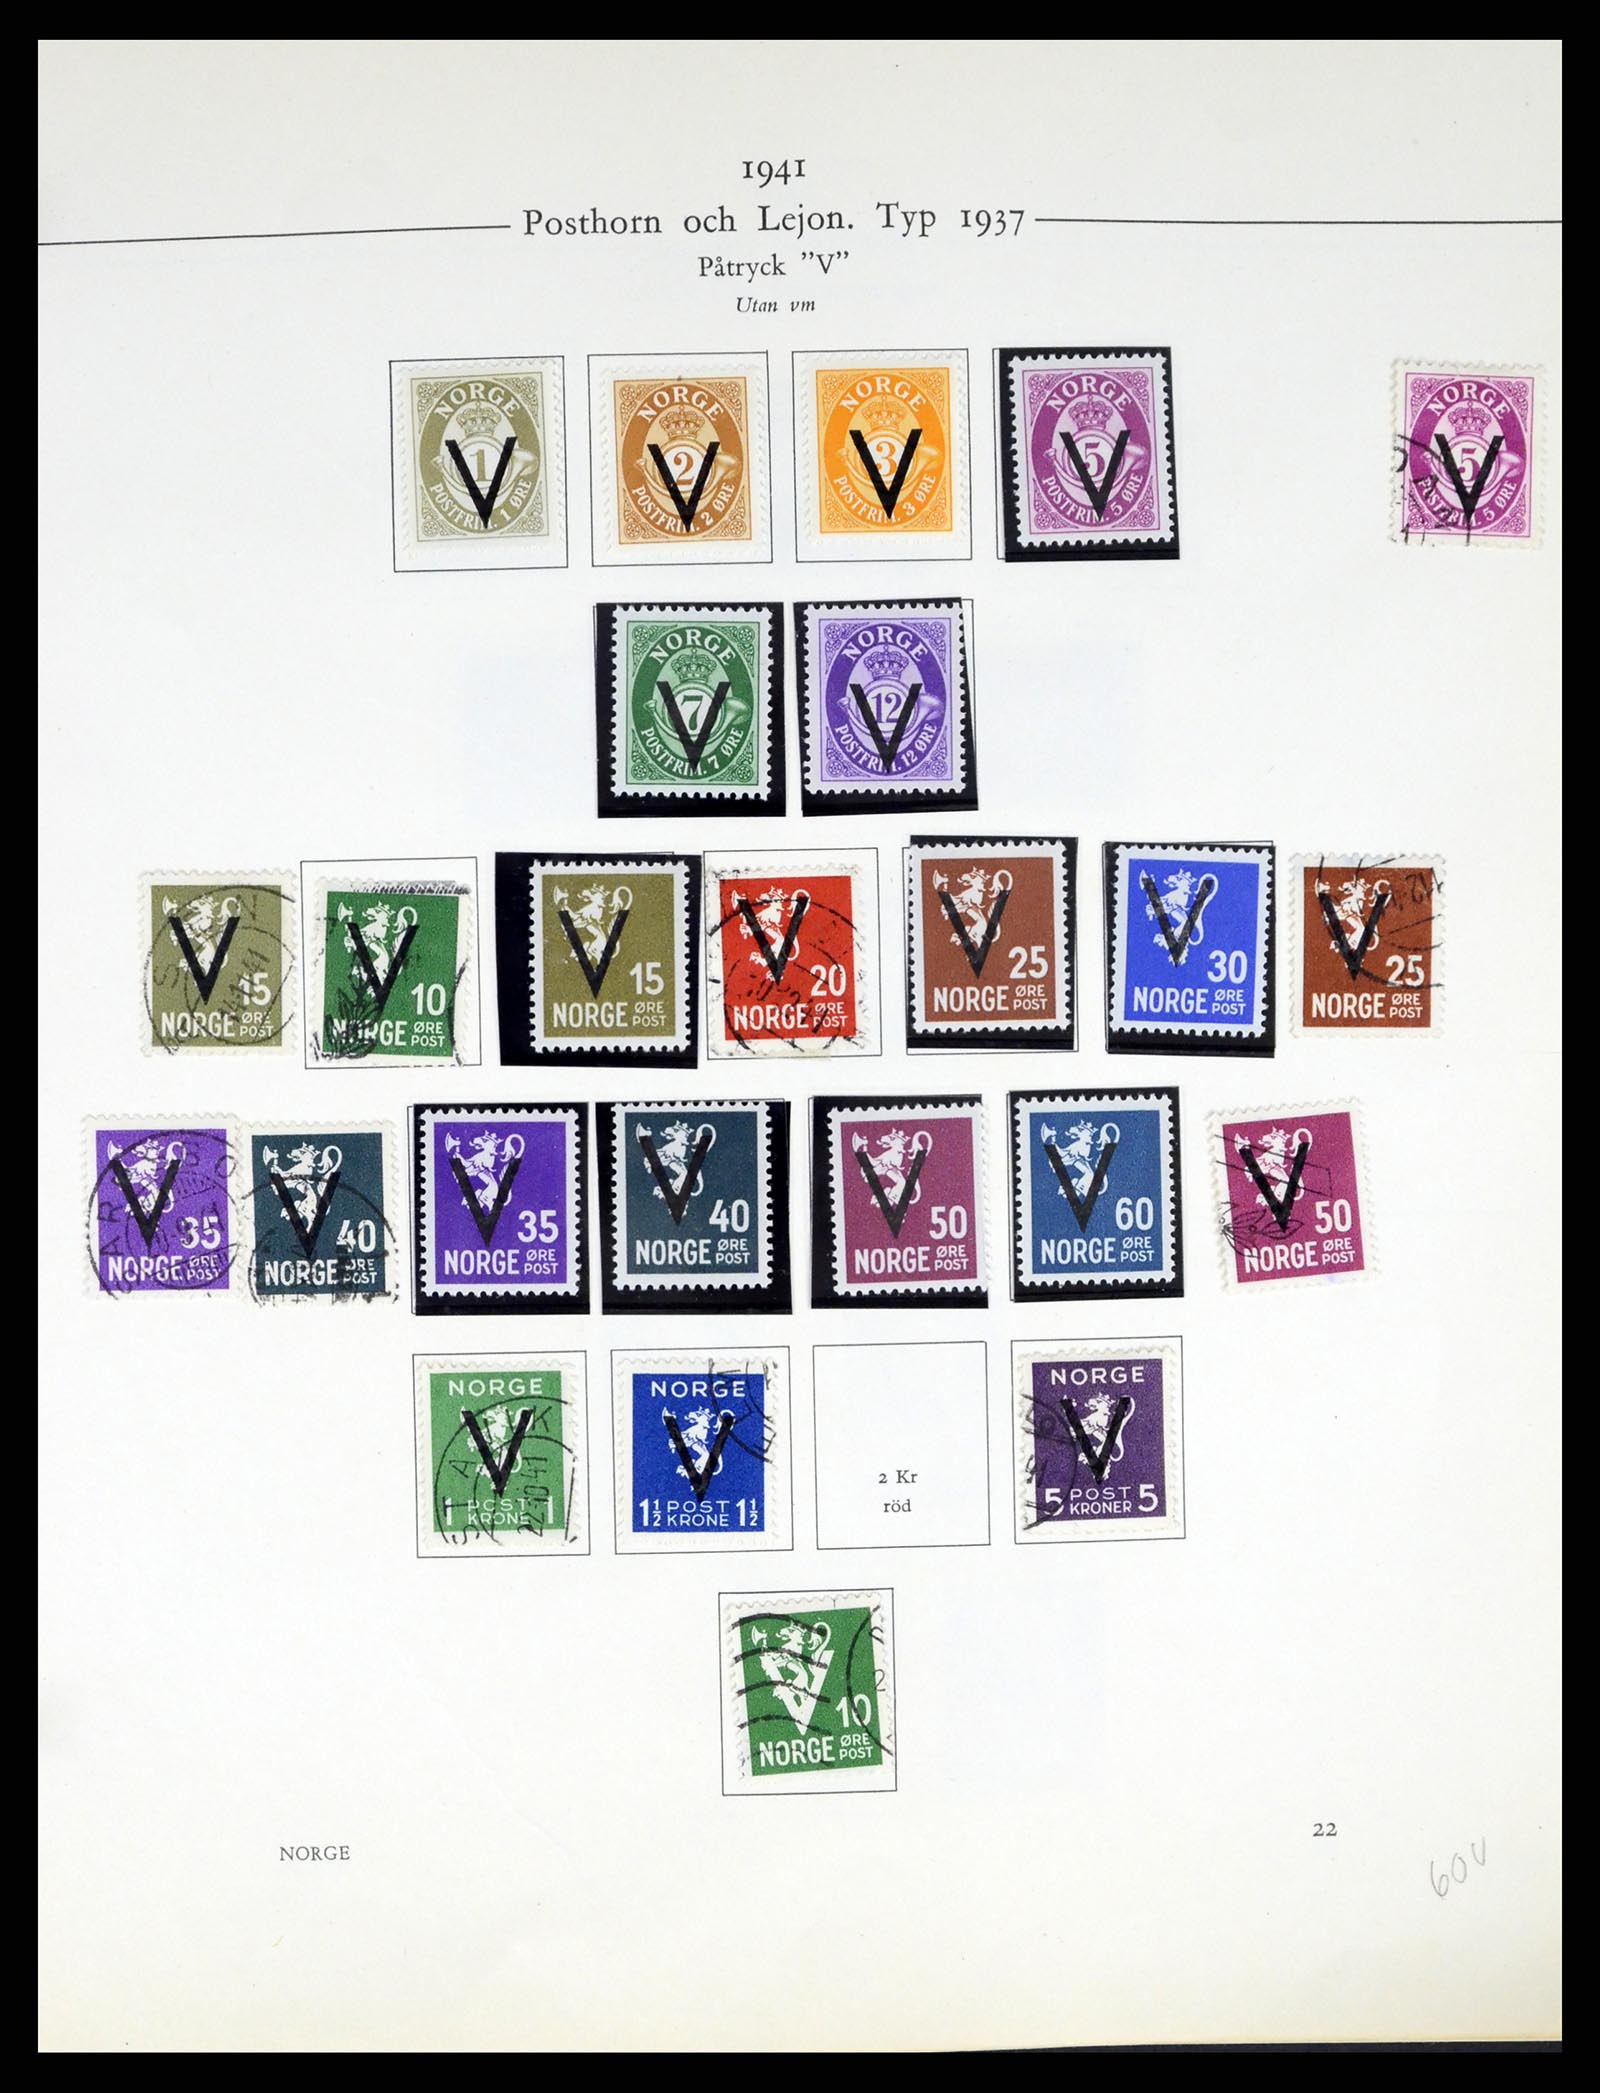 37387 022 - Stamp collection 37387 Scandinavia 1851-1960.